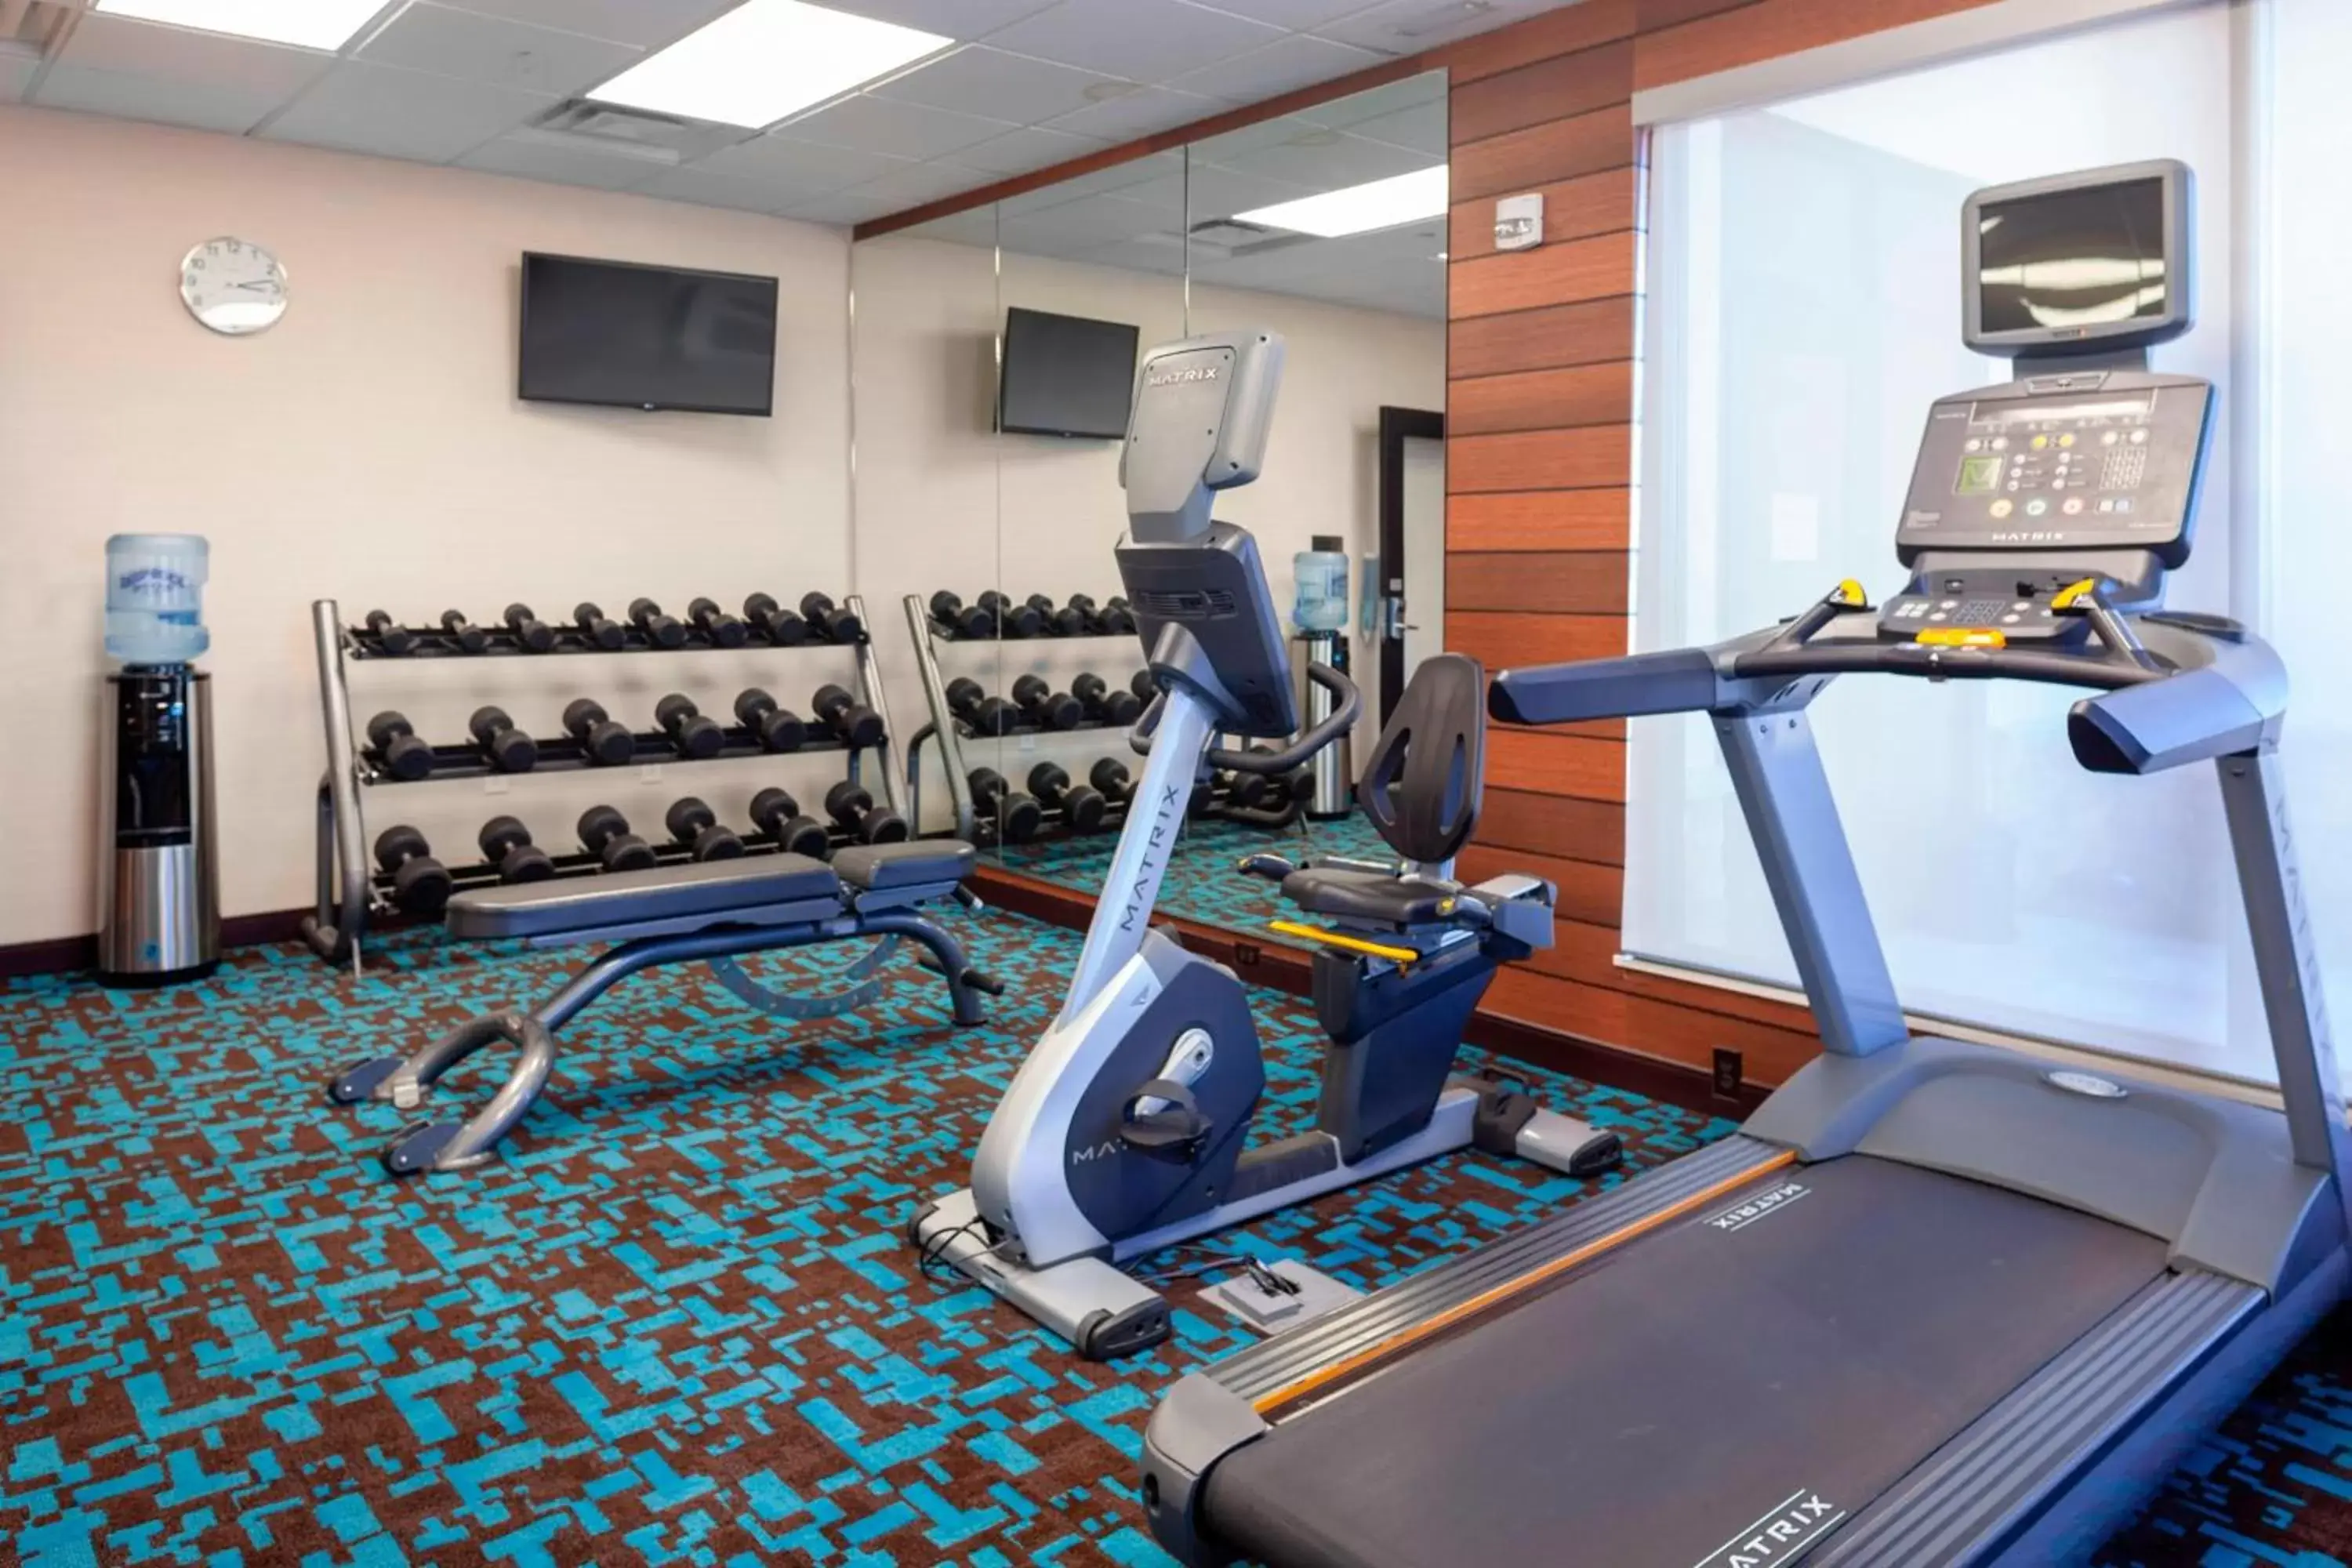 Fitness centre/facilities, Fitness Center/Facilities in Fairfield Inn & Suites by Marriott Alamosa